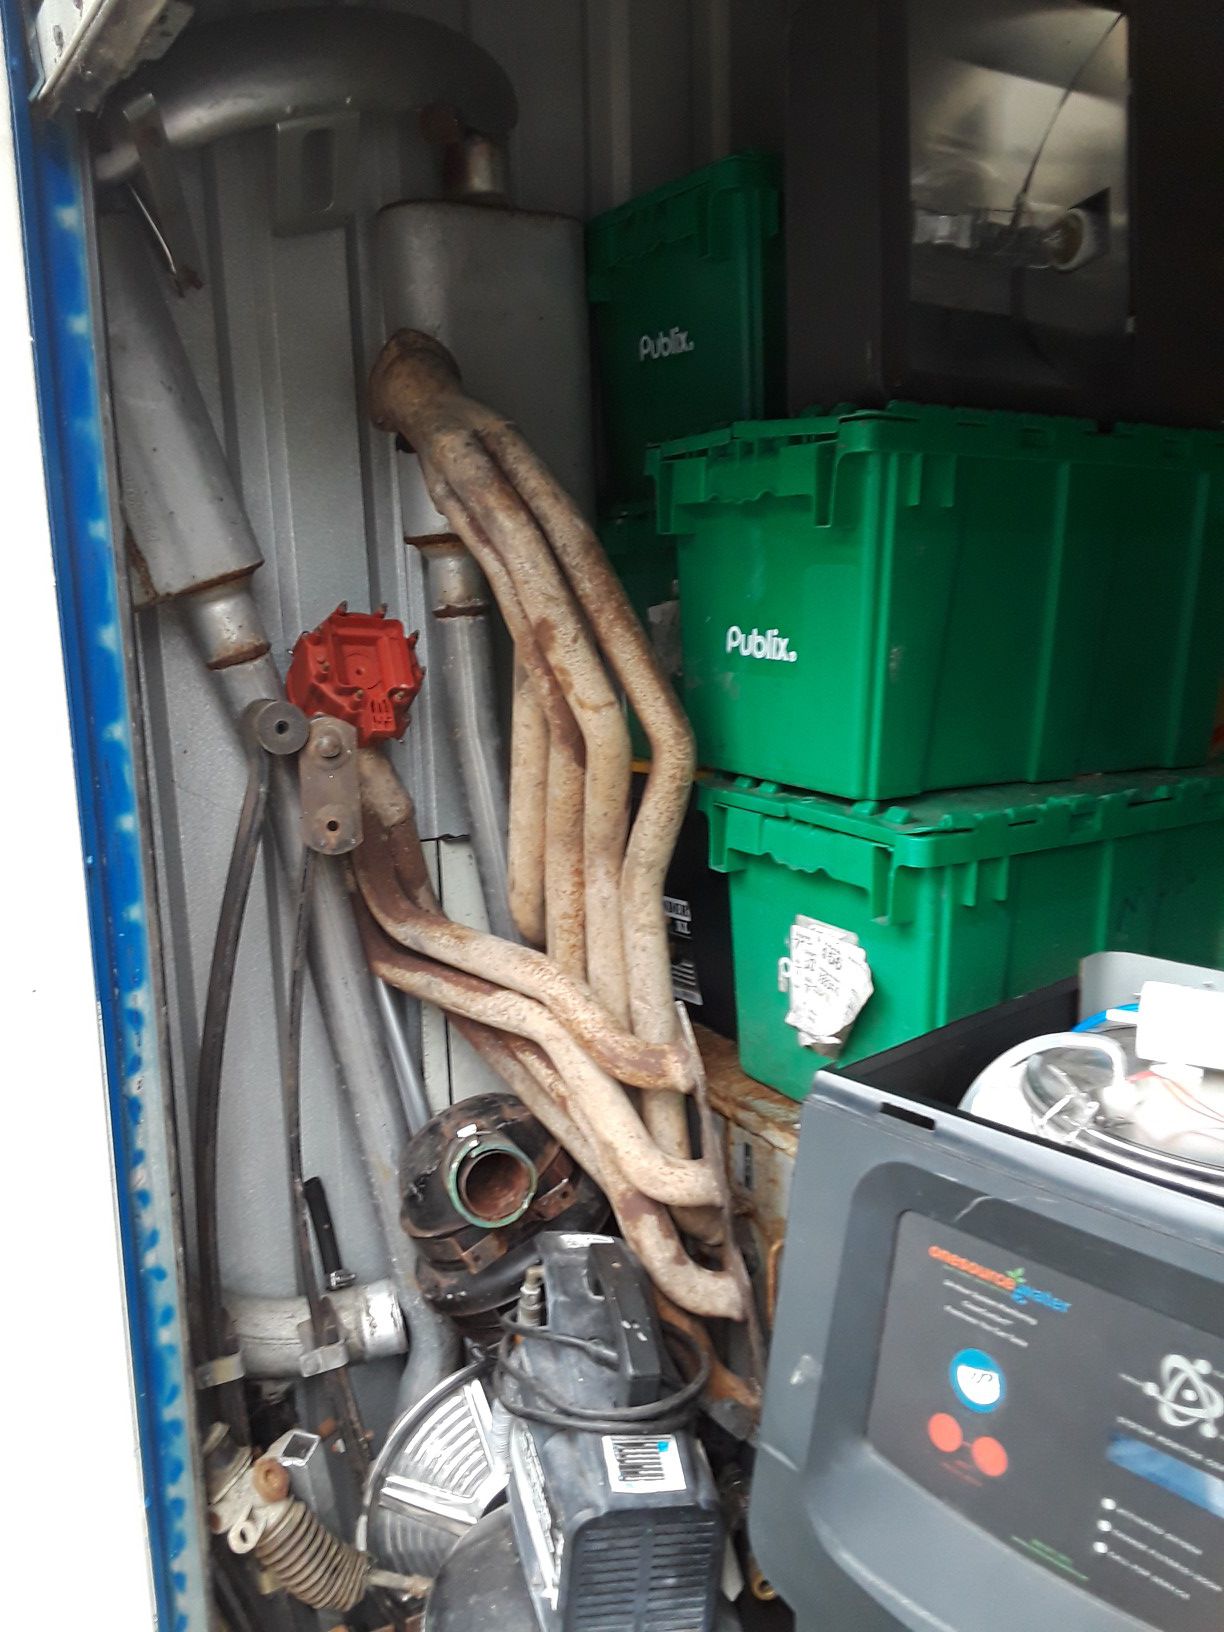 Storage unit full of truck car hot rod shop tools lawn equipment